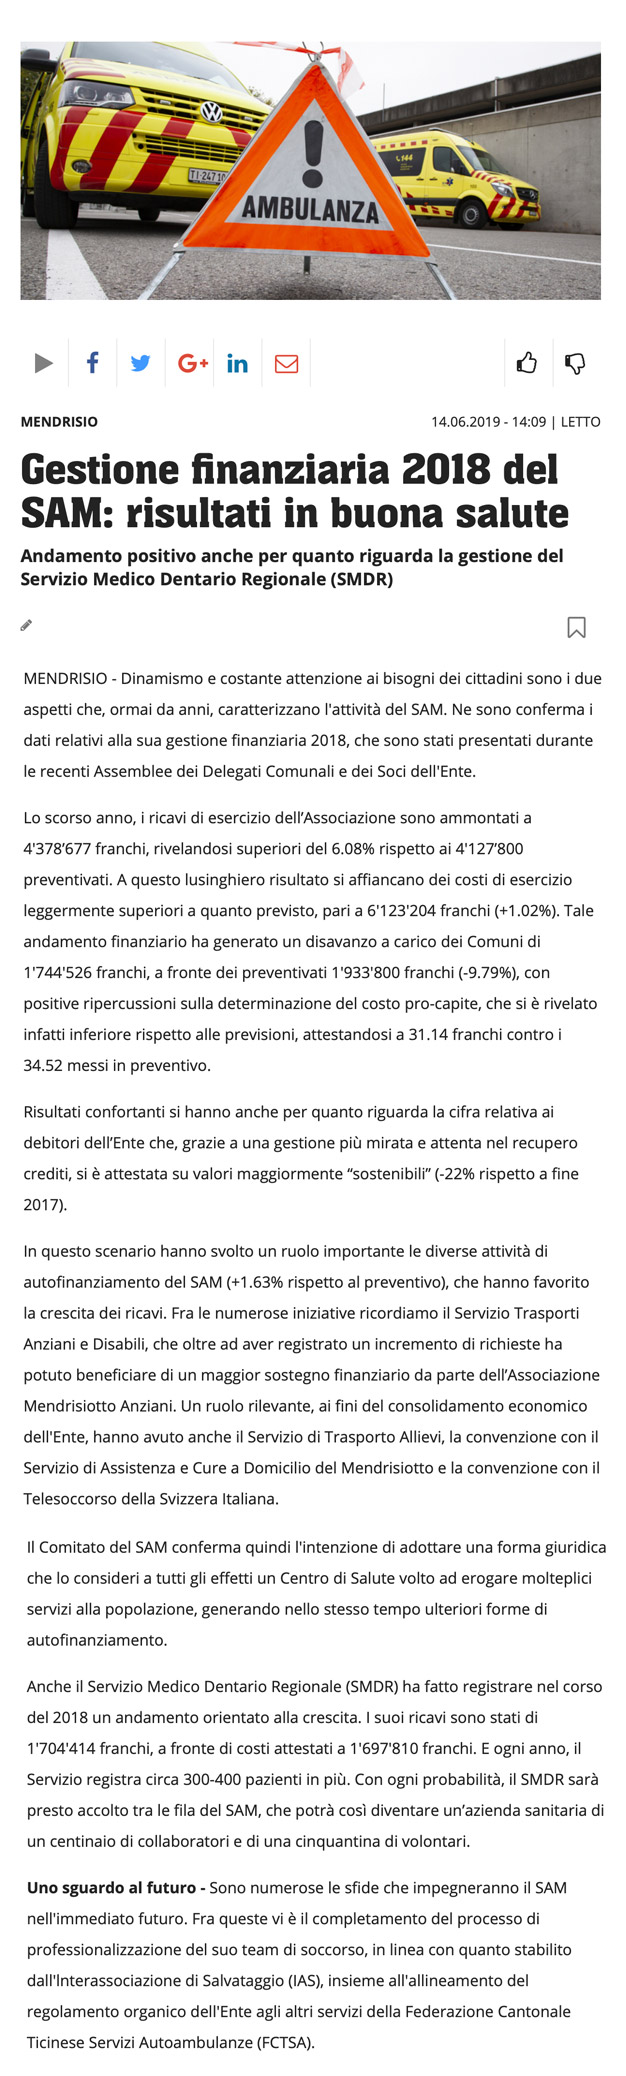 Ticinonline 14.06.2019